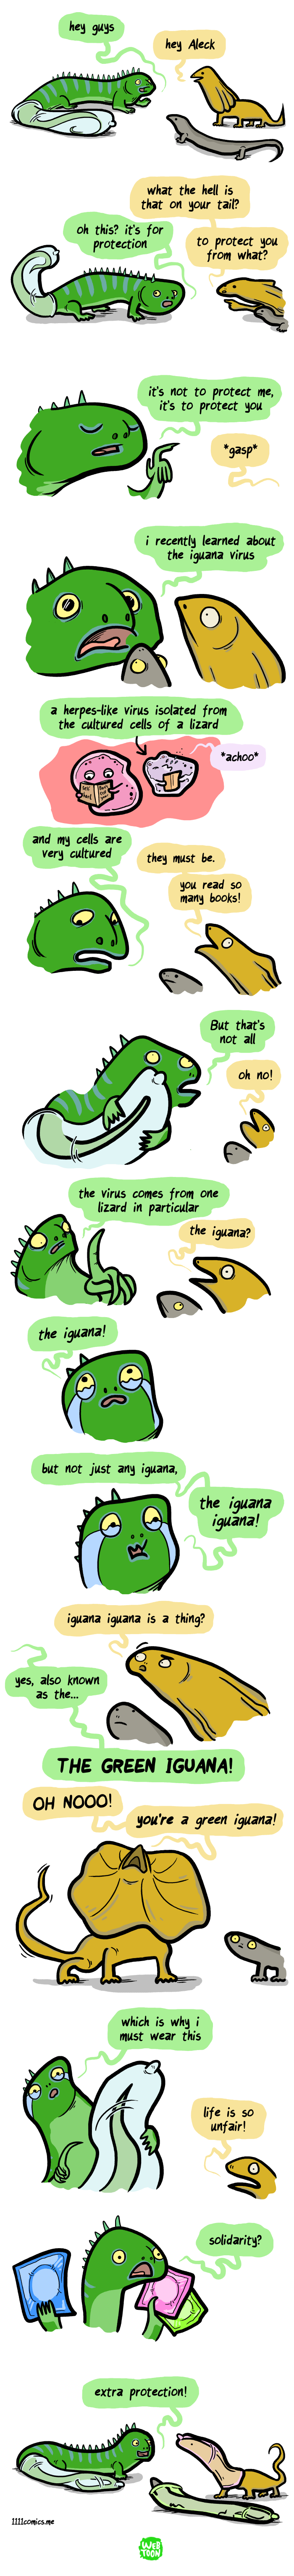 Iguana virus